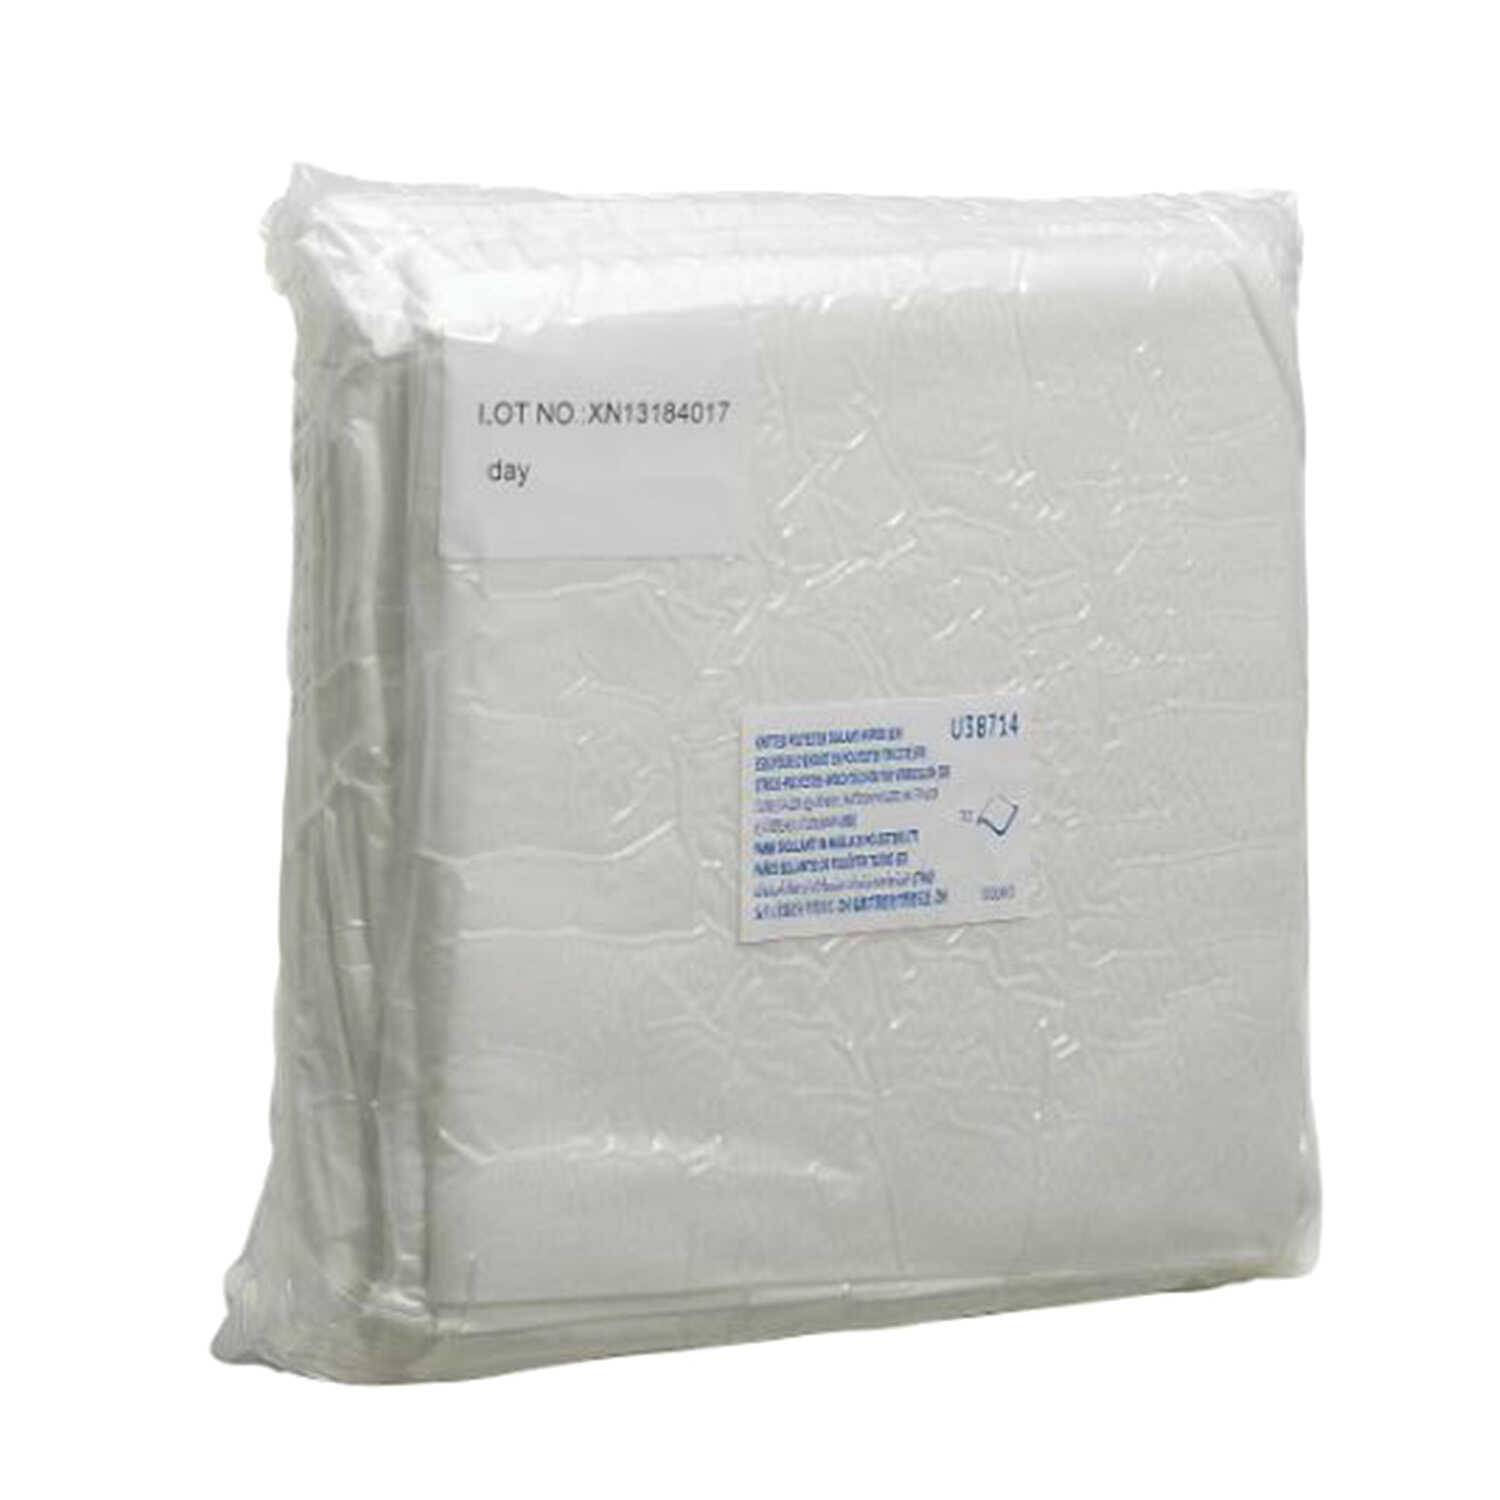 KIMTECH Knitted Polyester Wiper / Flat Sheet / White / 40 cm x 40 cm, 38714 ( Pack of 12 )